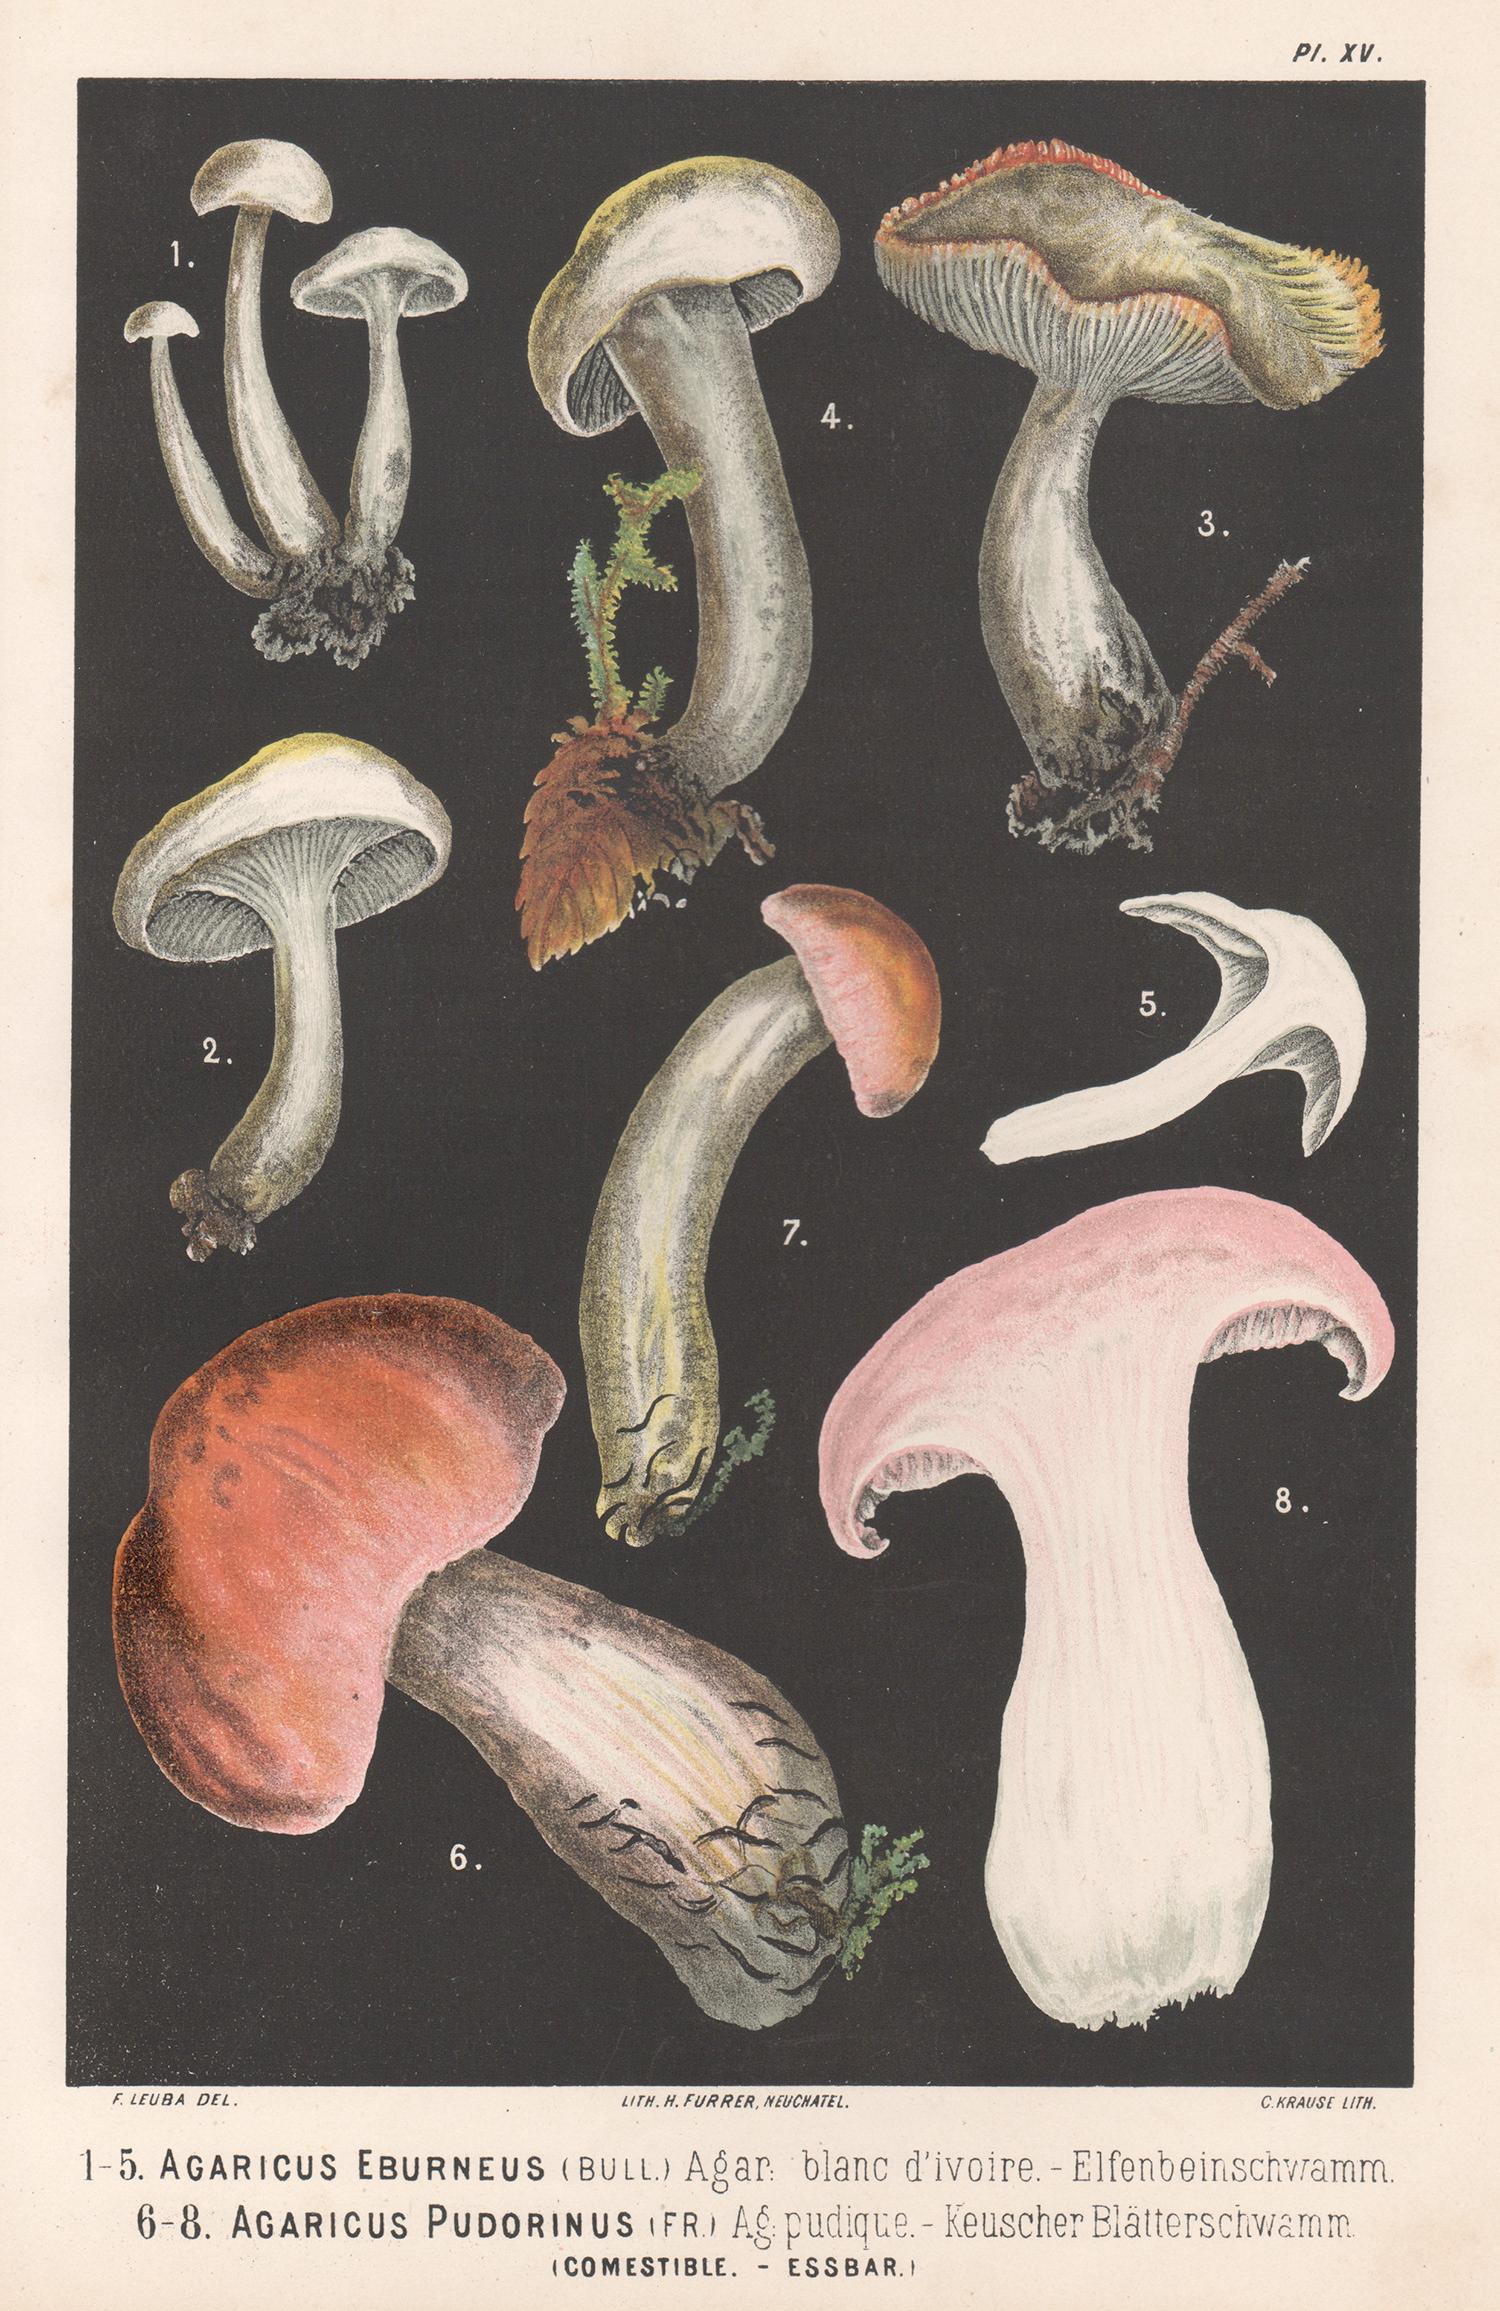 H Furrer after Fritz Leuba Still-Life Print - Agaricus Eburneus, Fritz Leuba antique mushroom fungi chromolithograph, 1890